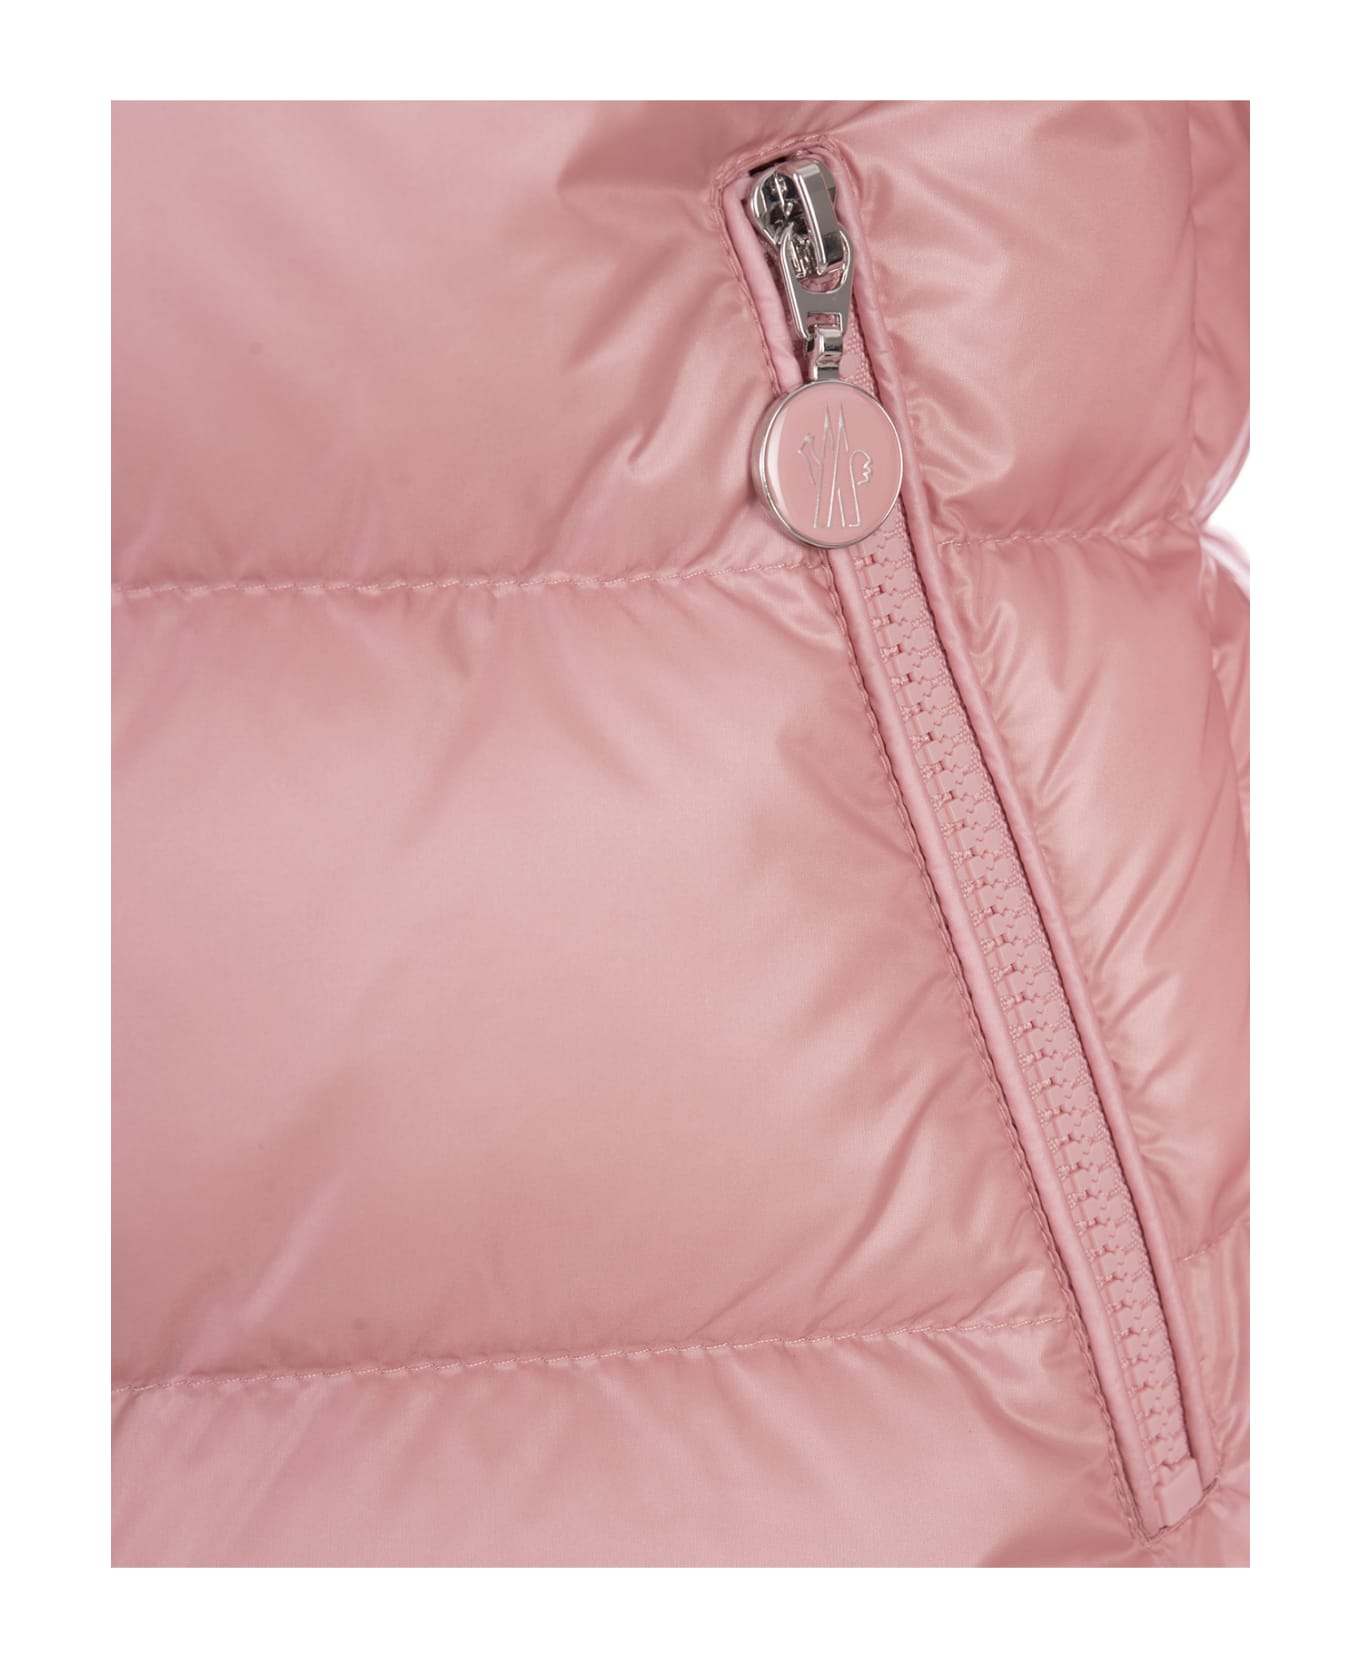 Moncler Pink Gles Down Jacket - Pink